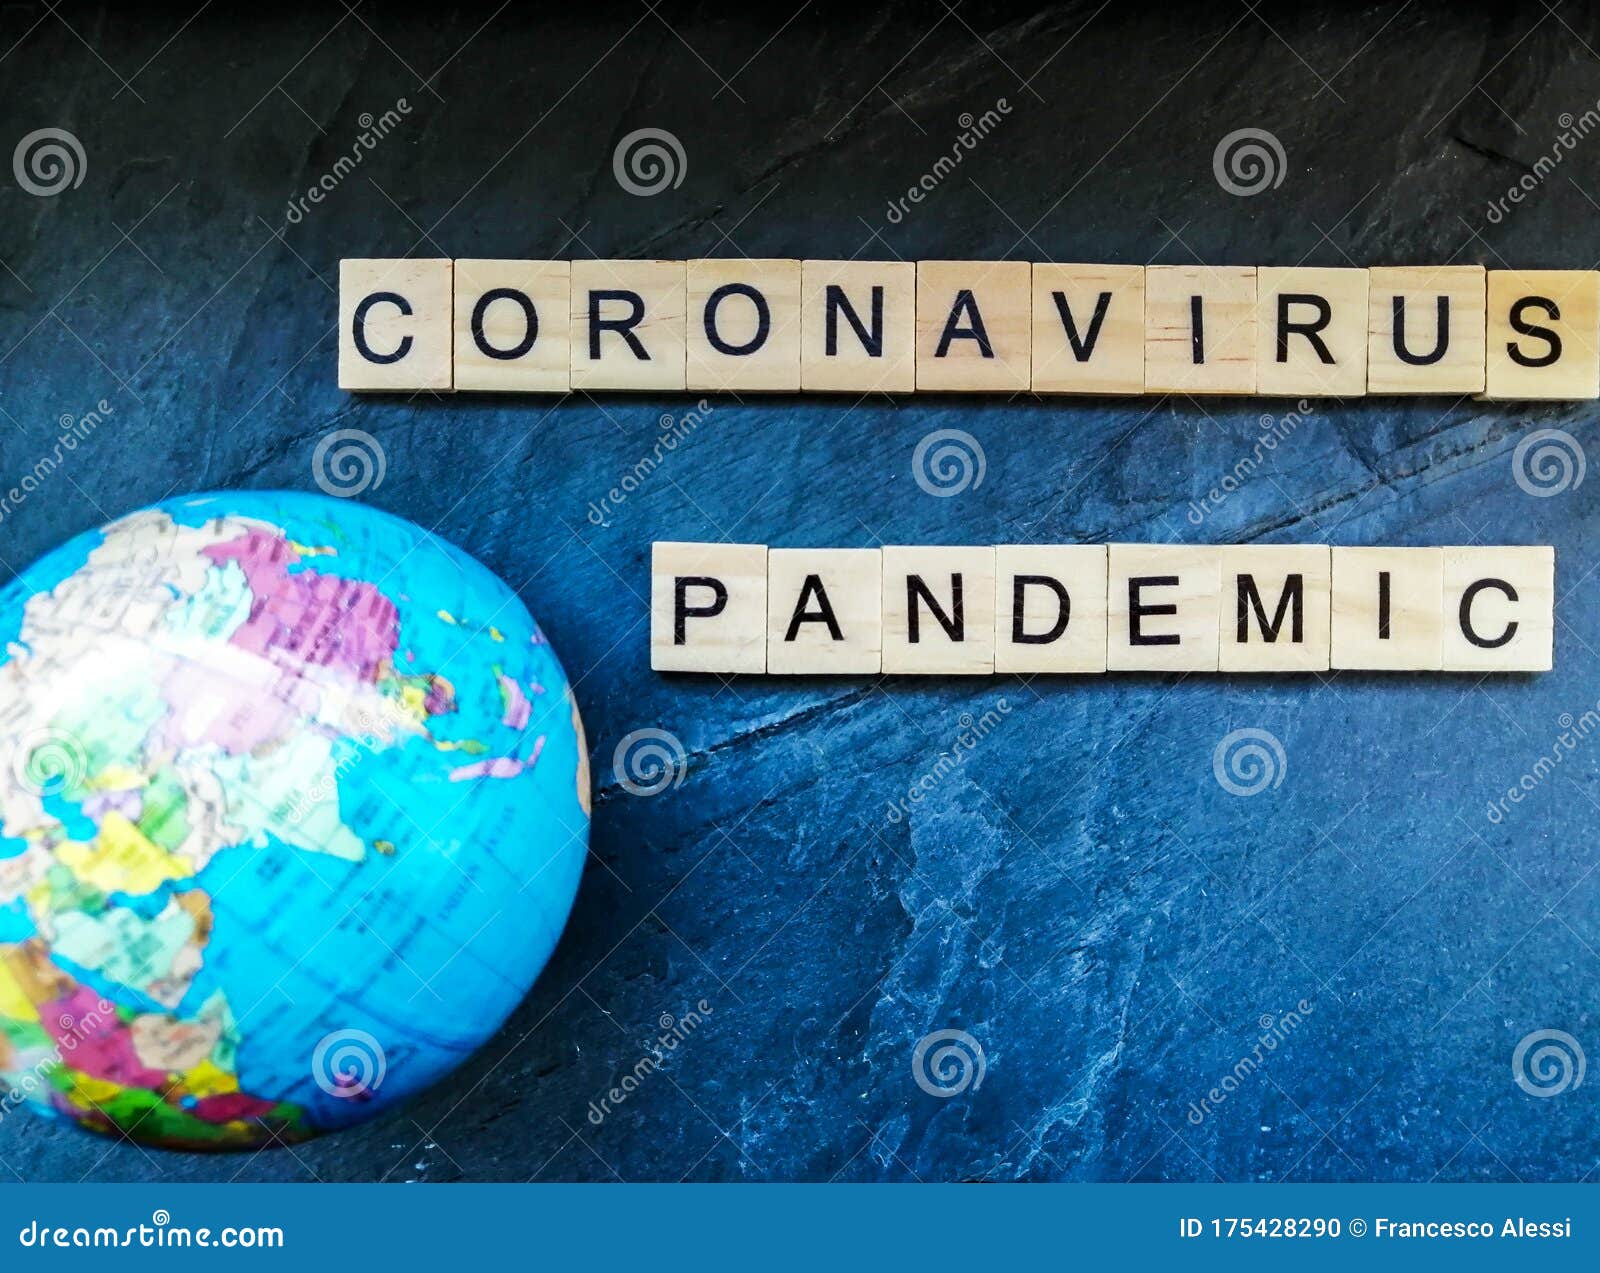 coronavirus pandemic text with globe on blue background